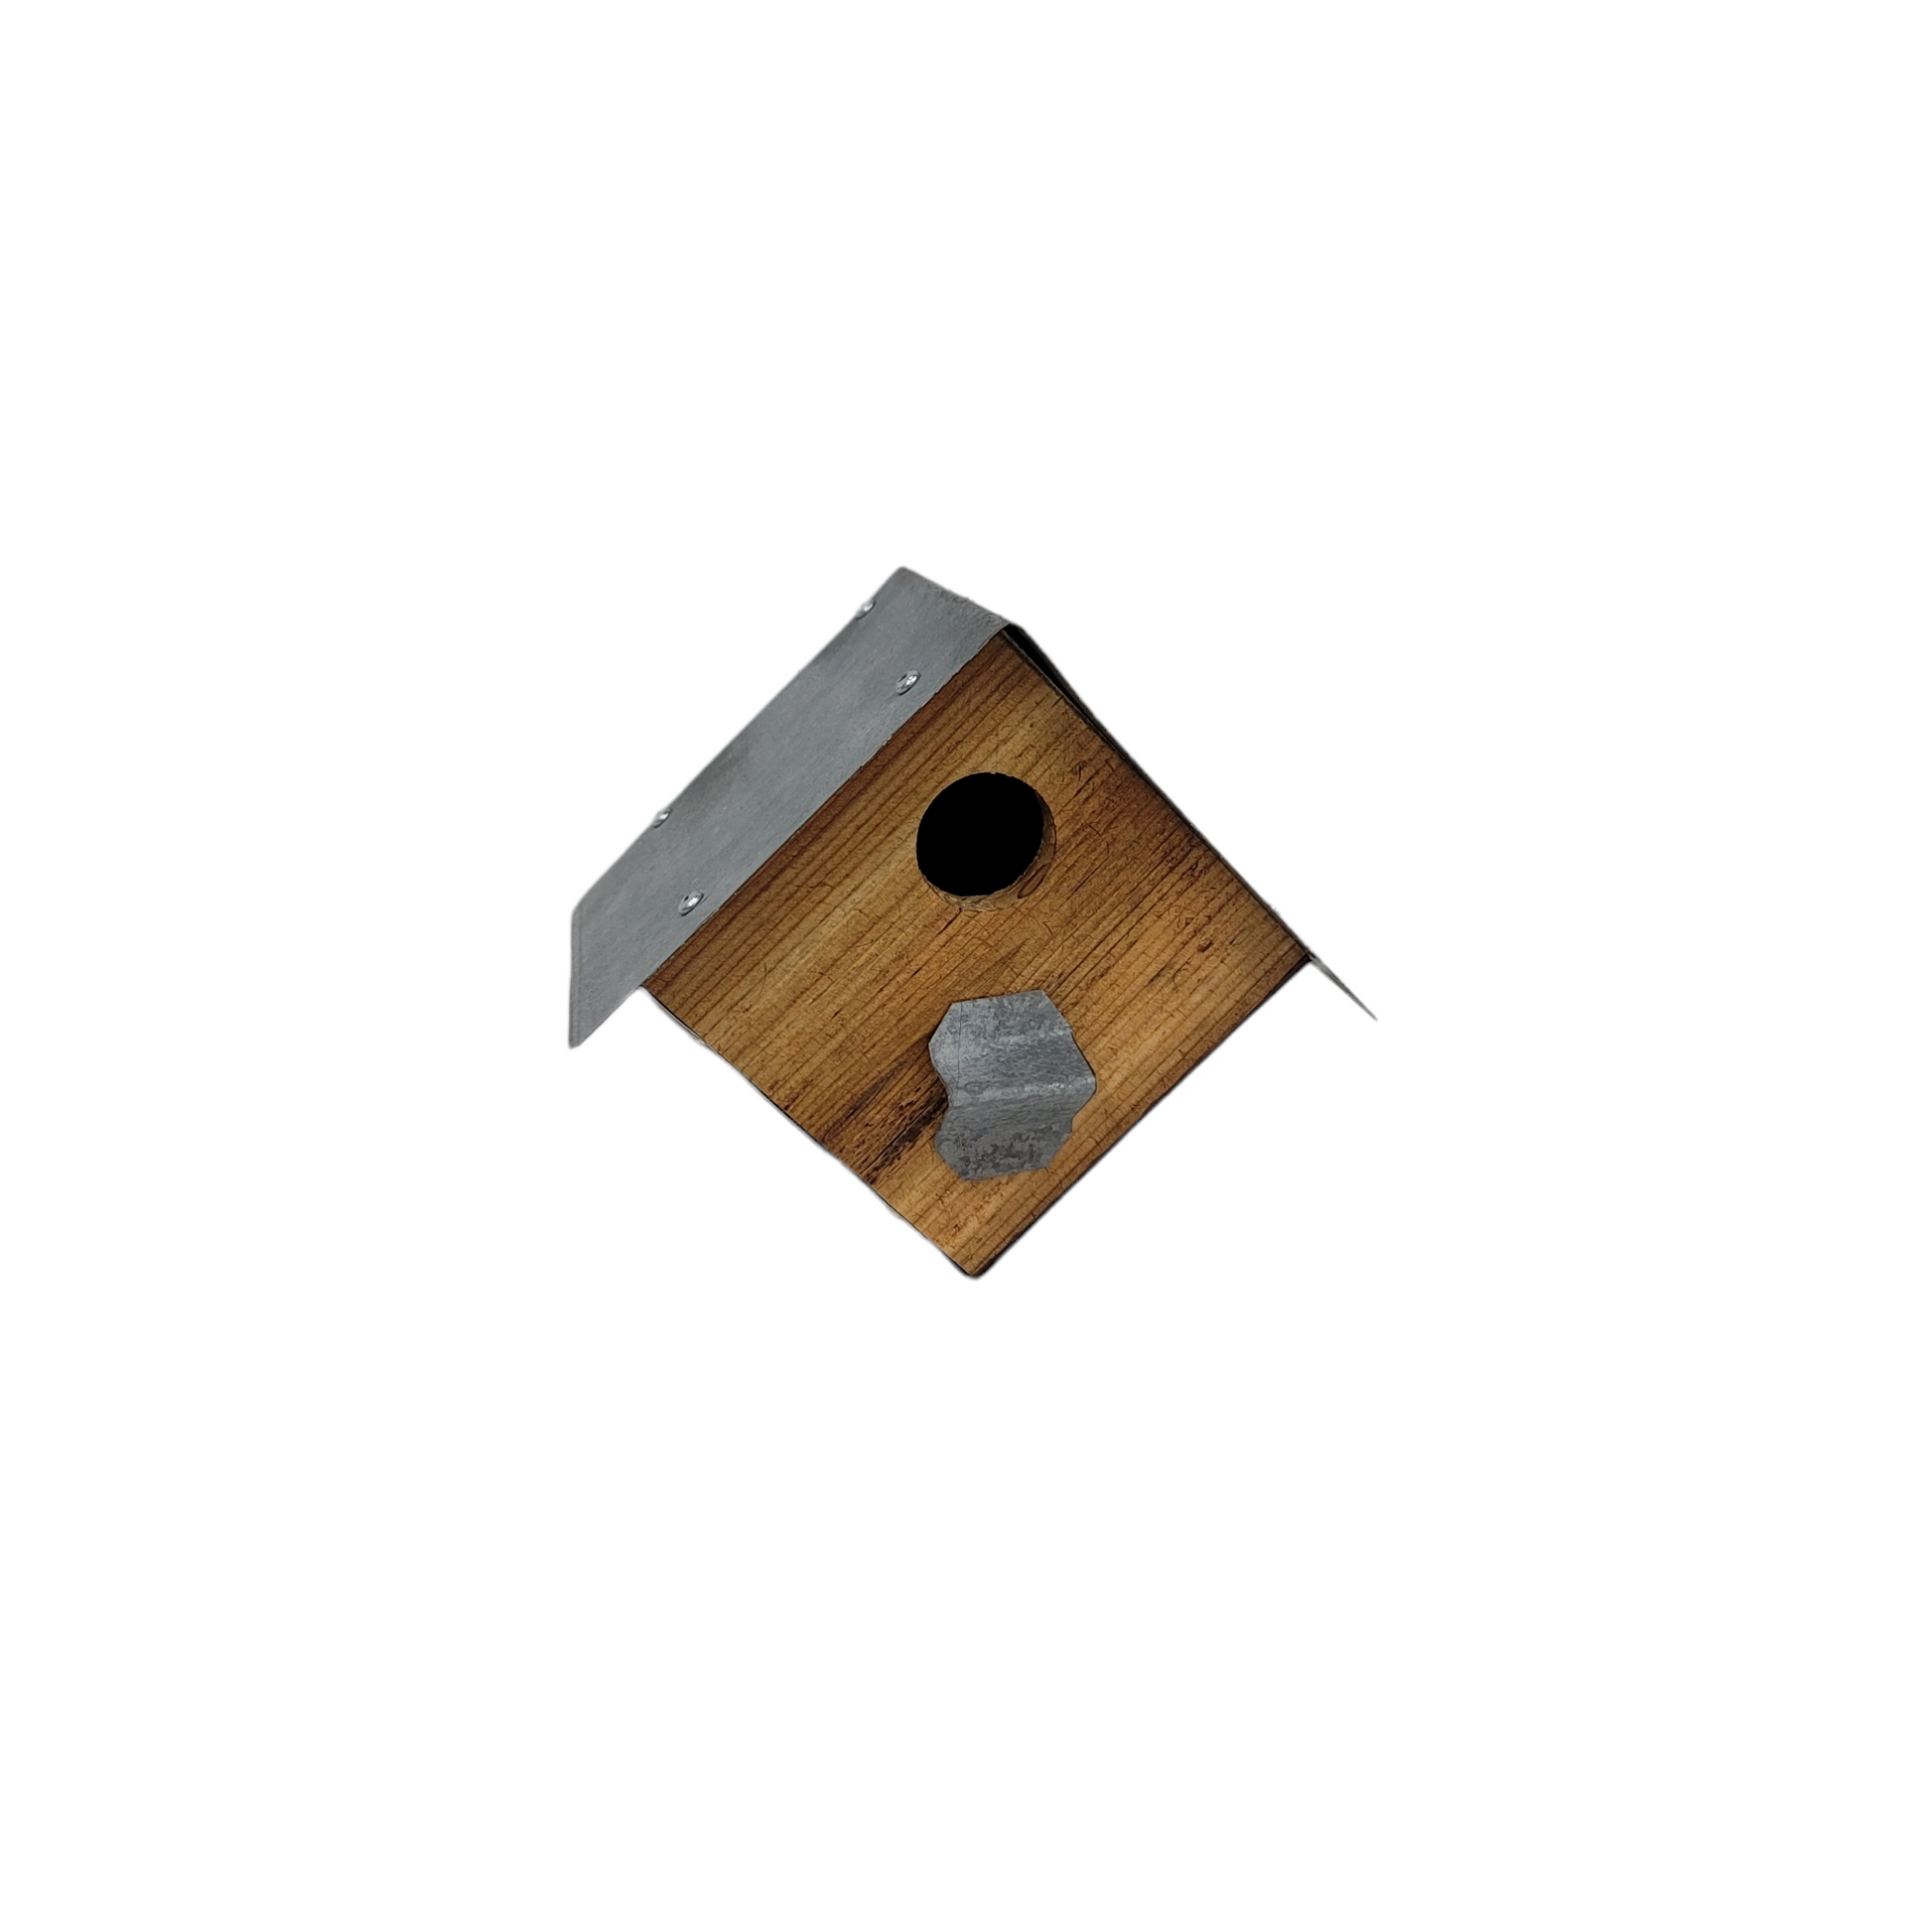 birdhouse 3 rustic styles to choose from diamond